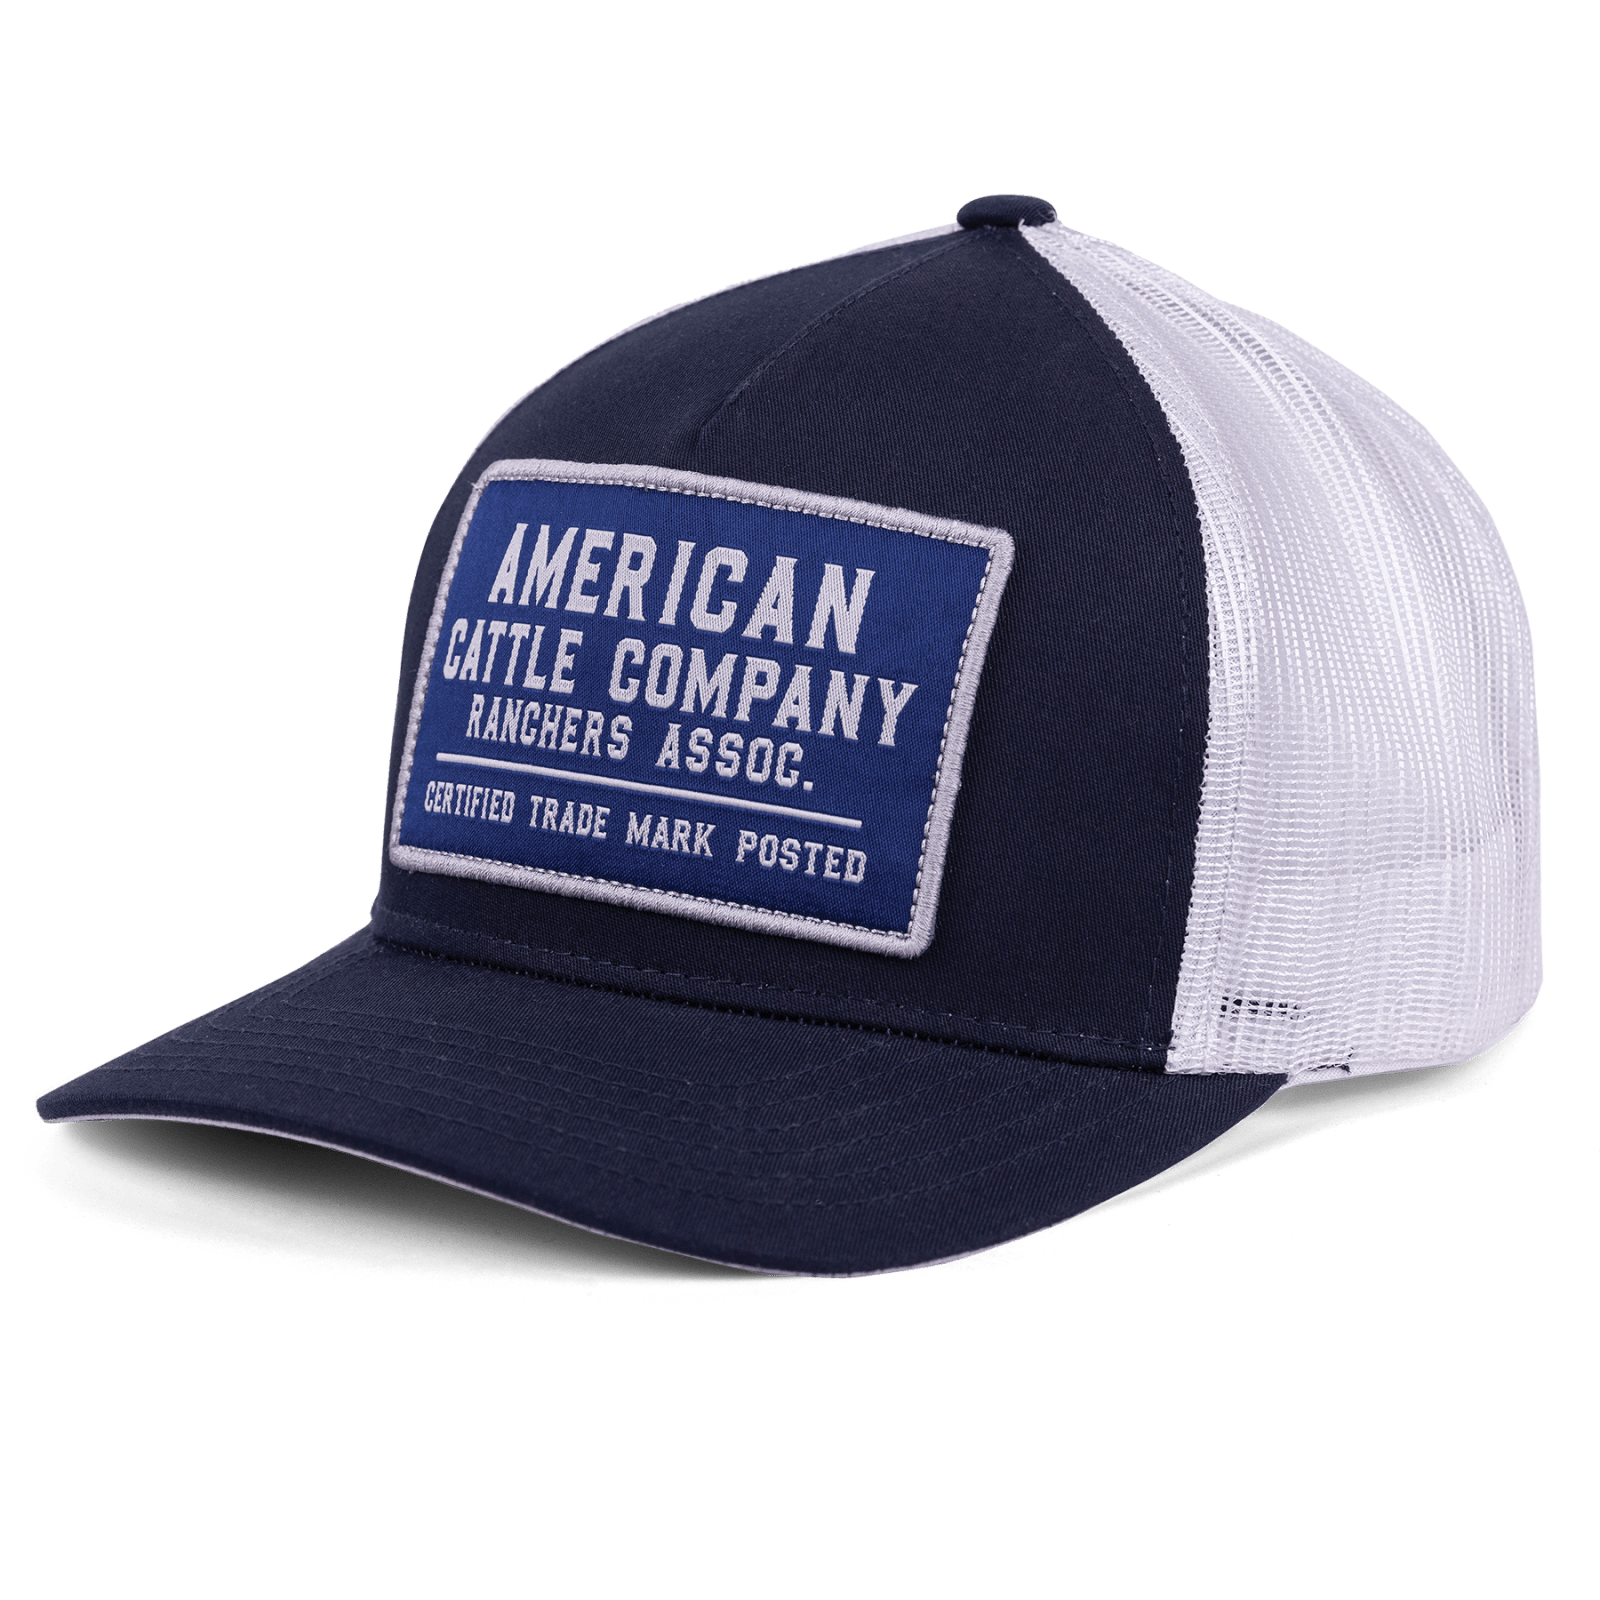 Rural Cloth Hats Ranchers Association Hat